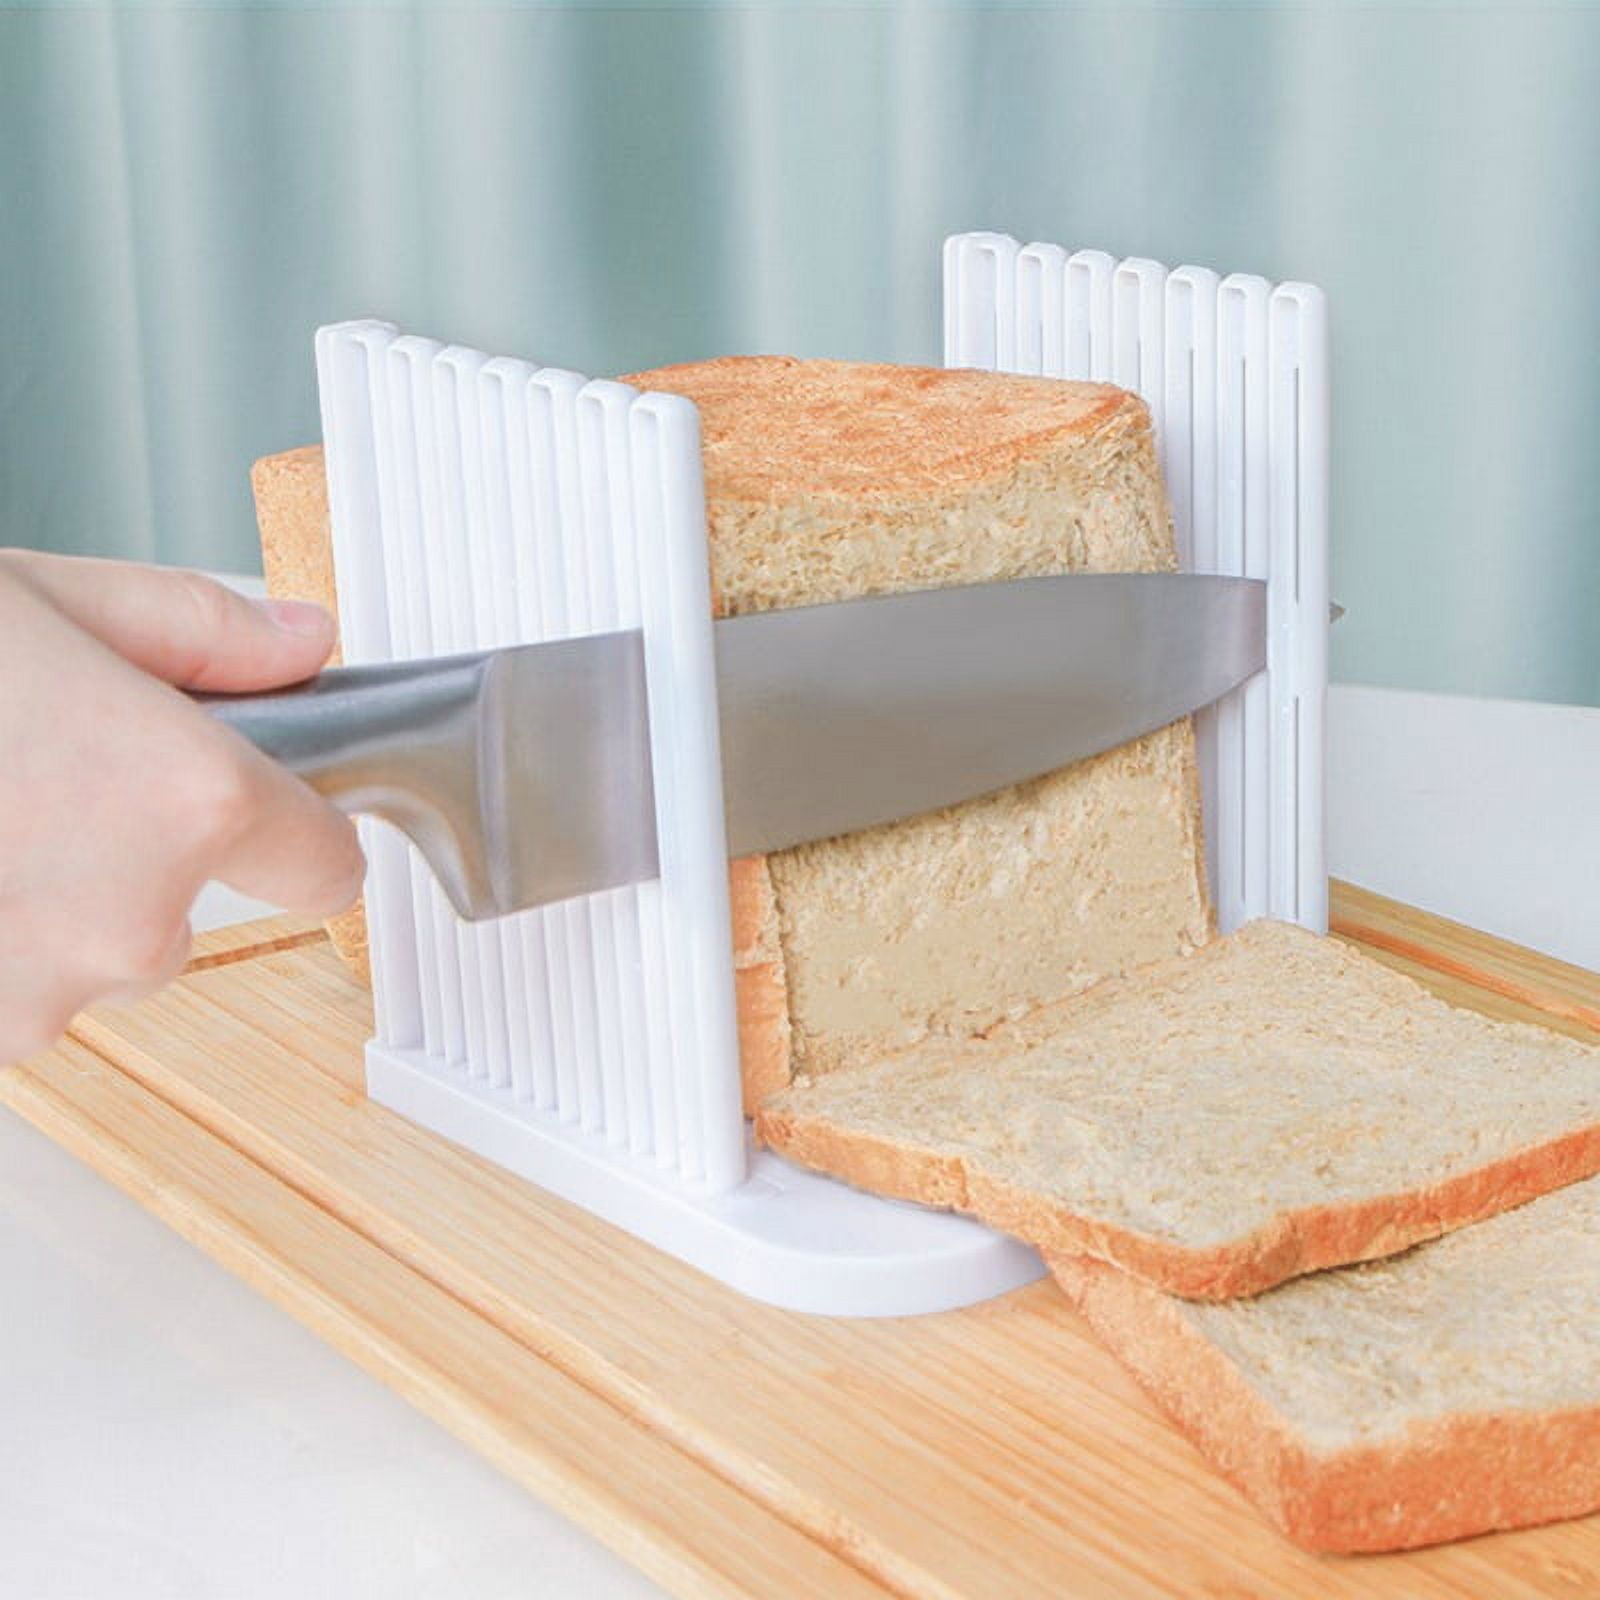 Travelwant Bread Slicer,Toast Loaf Cutter Slicing Cake Sandwich Baking Kitchen Tools FoldLoaf Cutter Machine - Foldable Adjustable & Customizable to 5